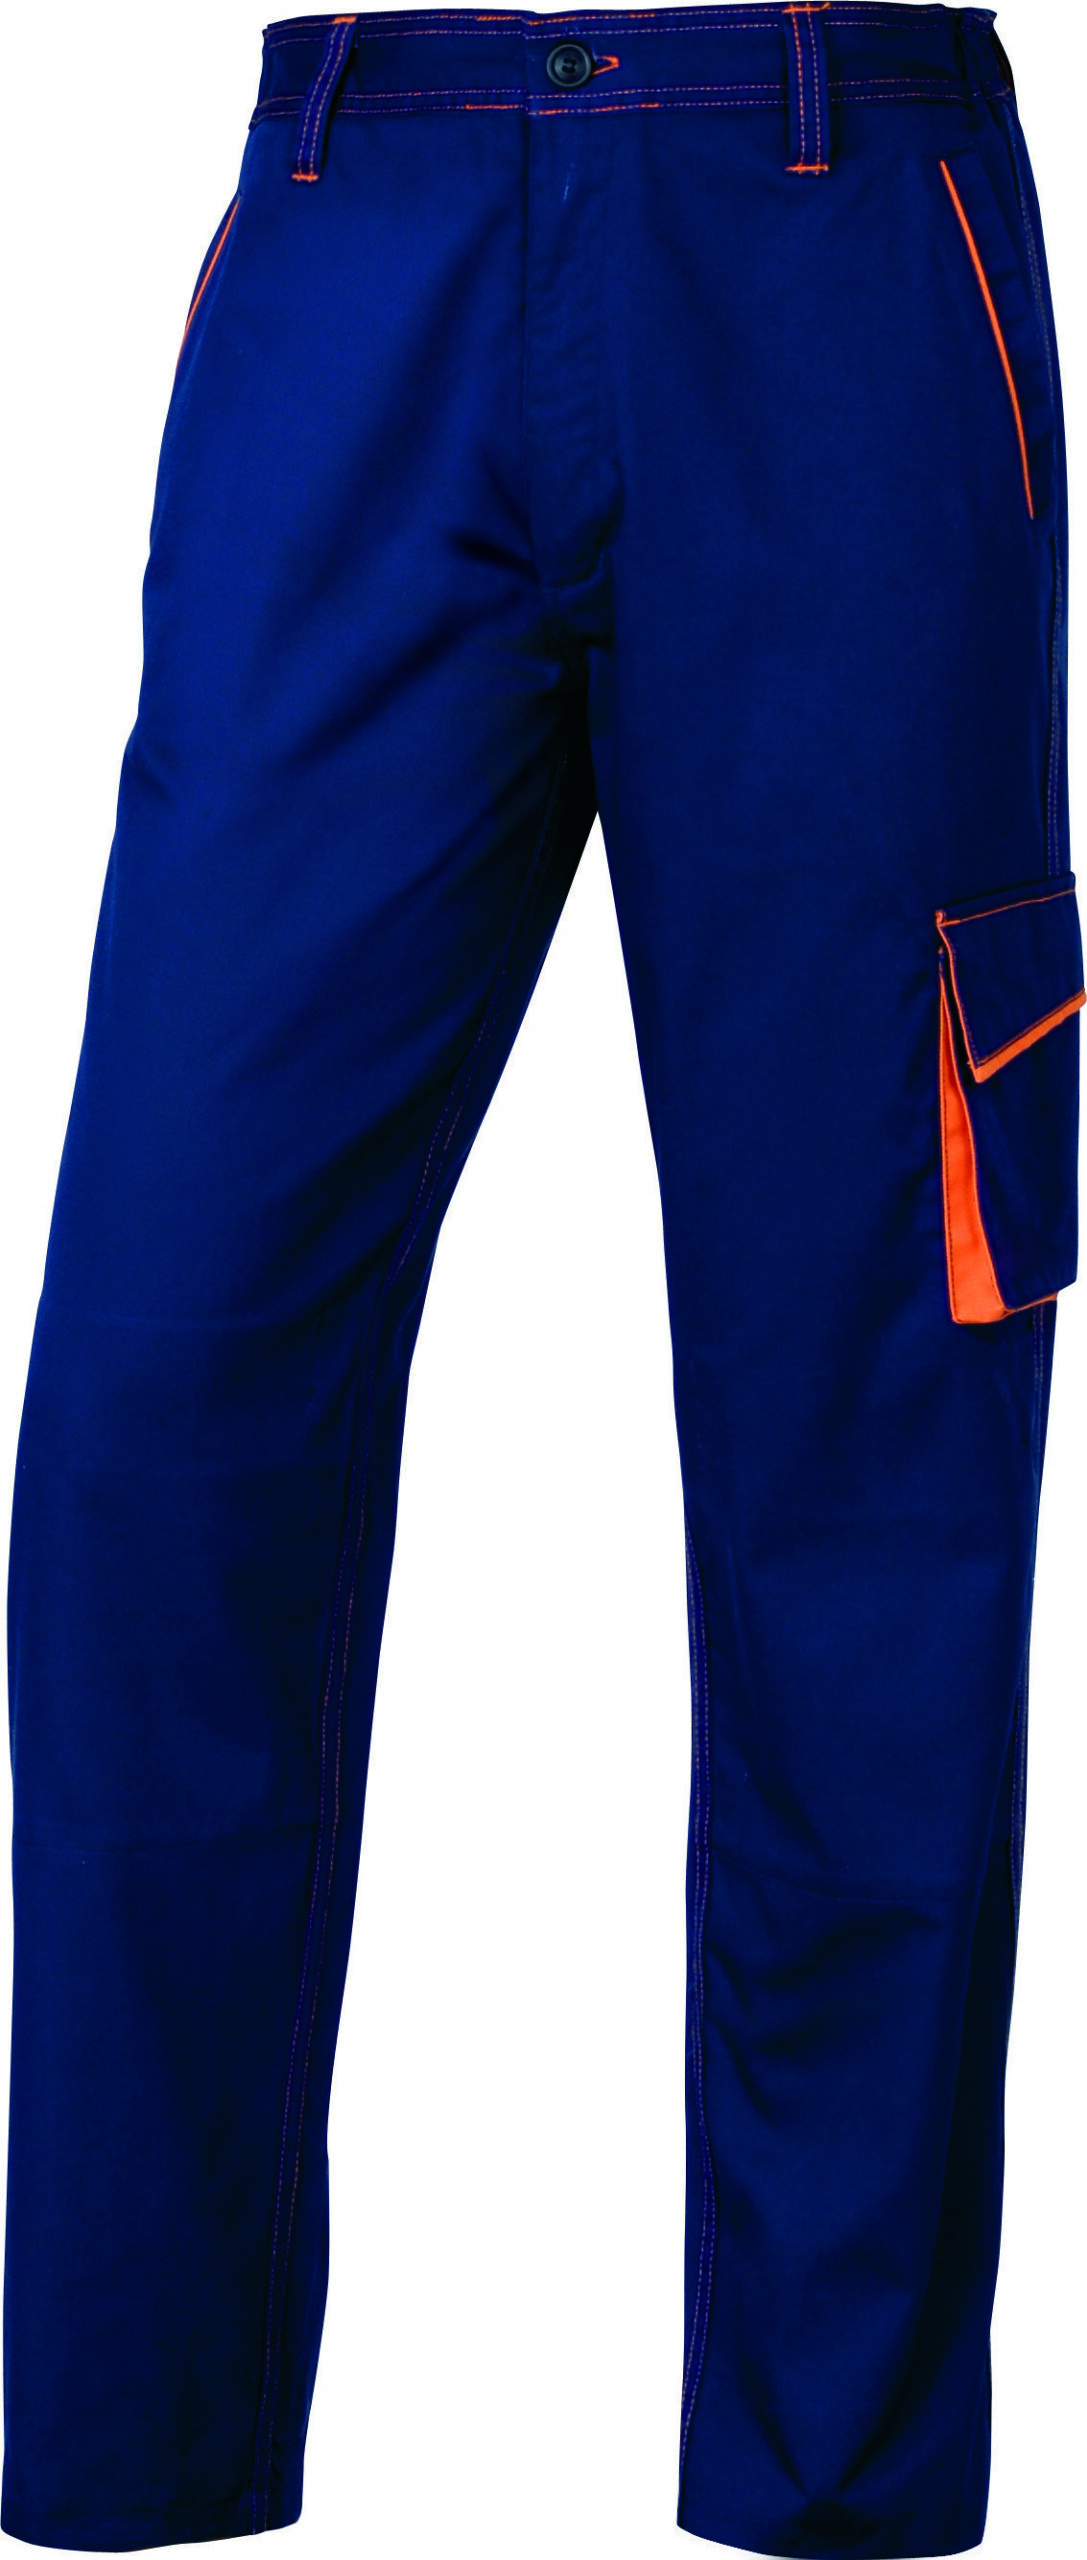 Pantalone da Lavoro M6pan Blu Arancio Tg L Panostyle M6panbmgt 3295249151249